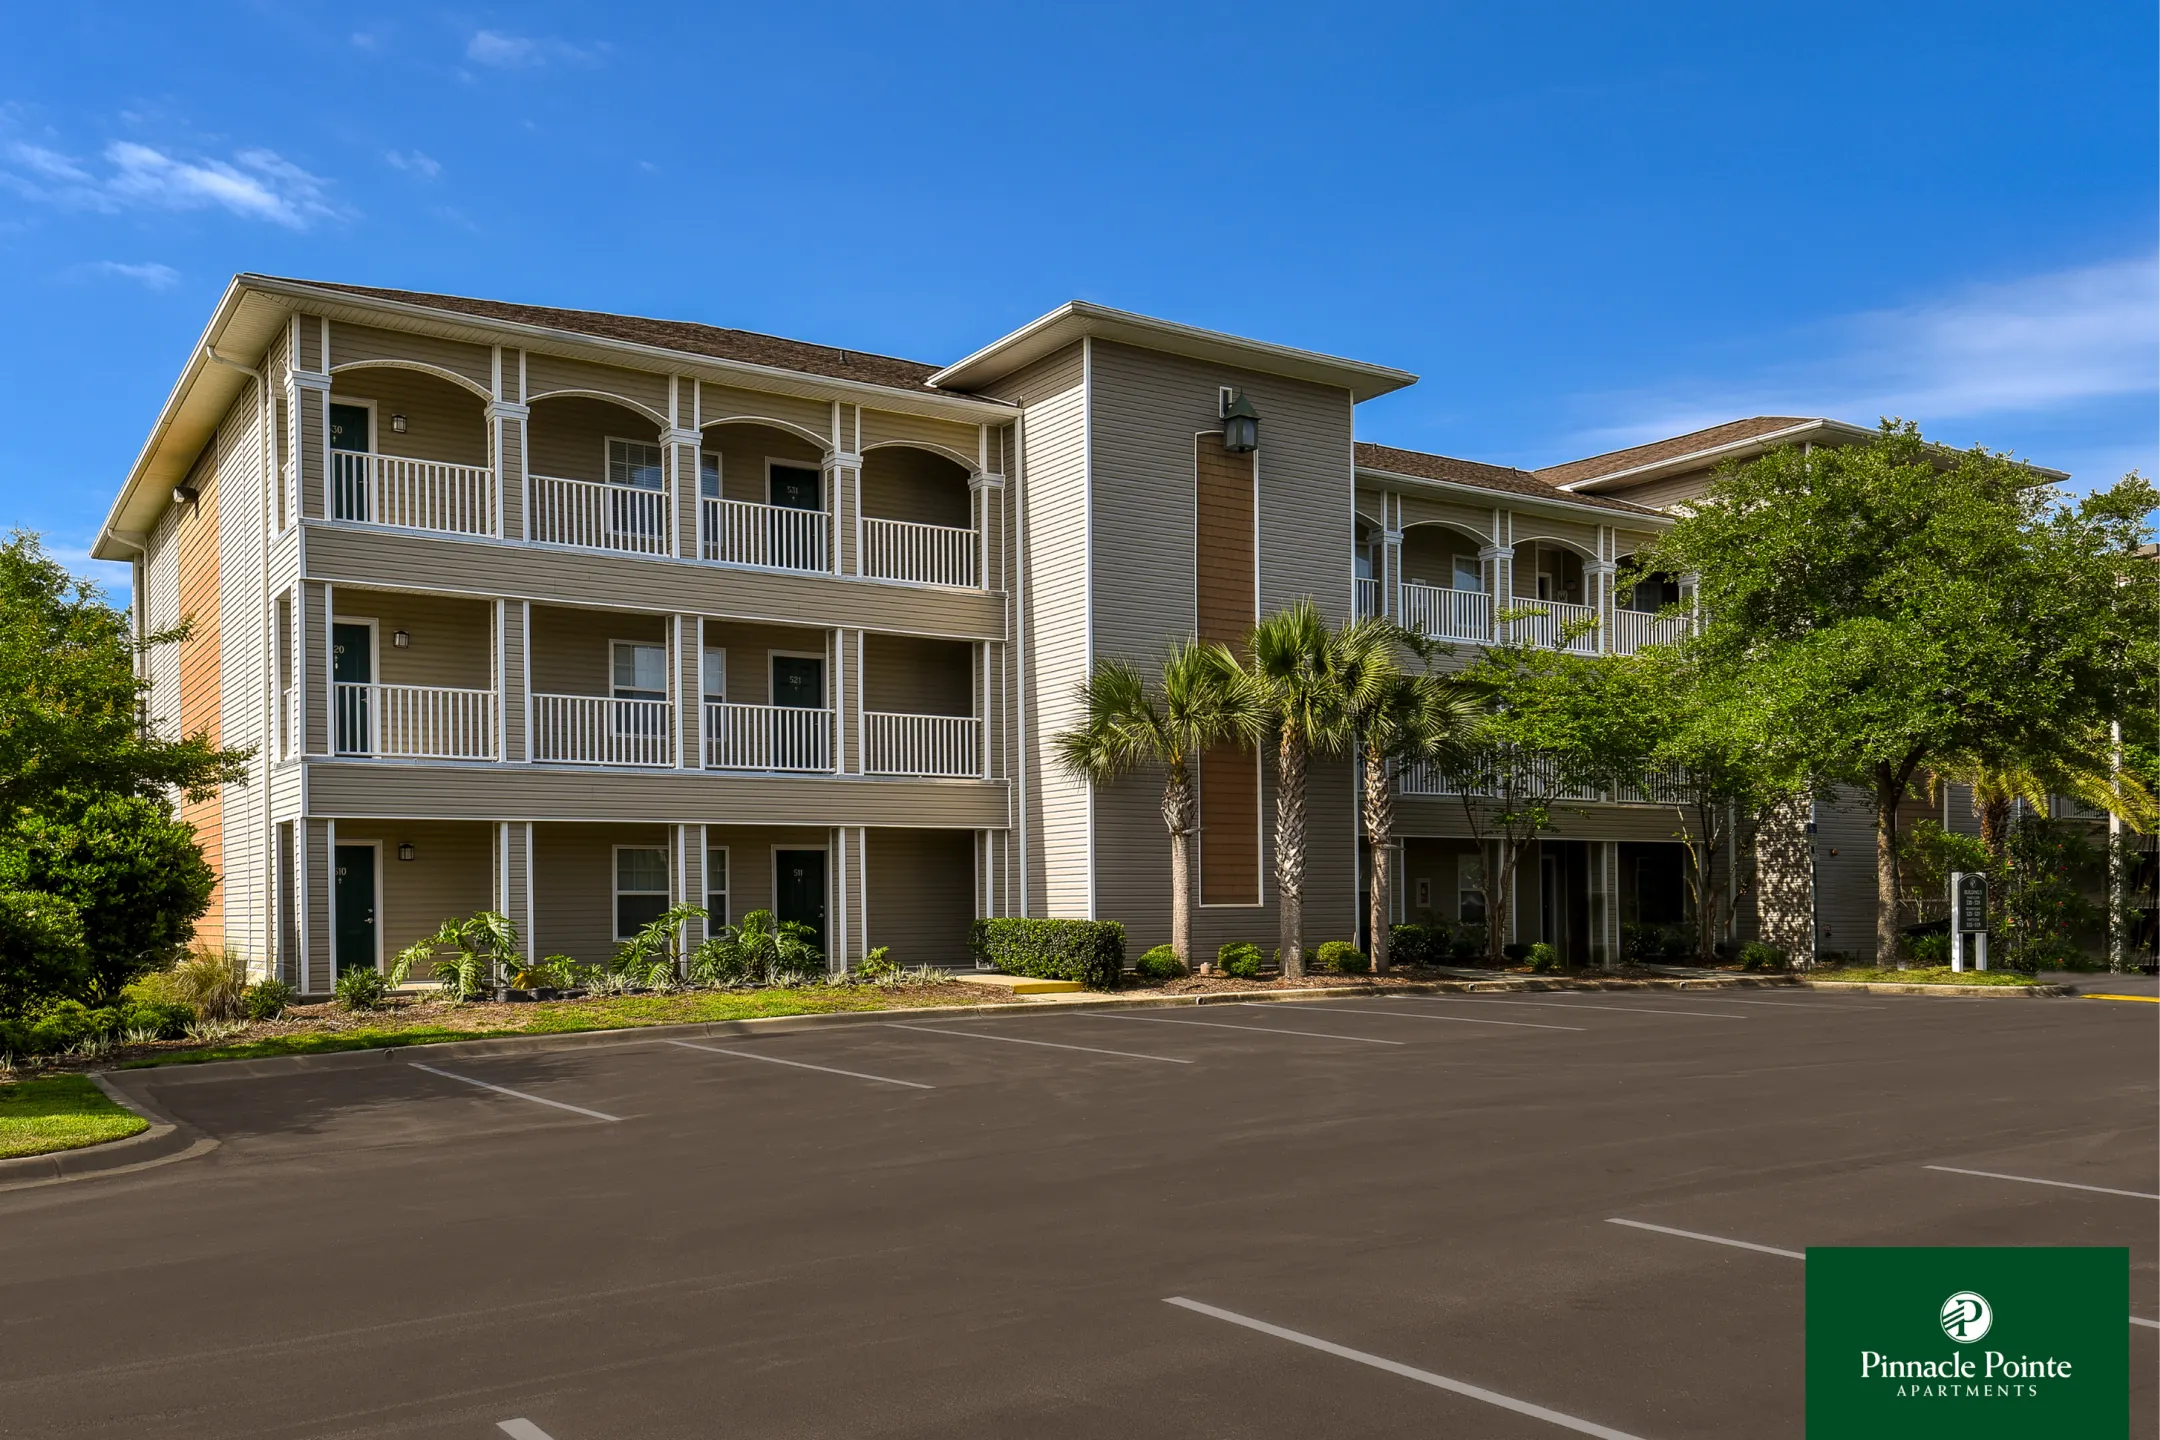 Building - Pinnacle Pointe Apartments - Crestview, FL